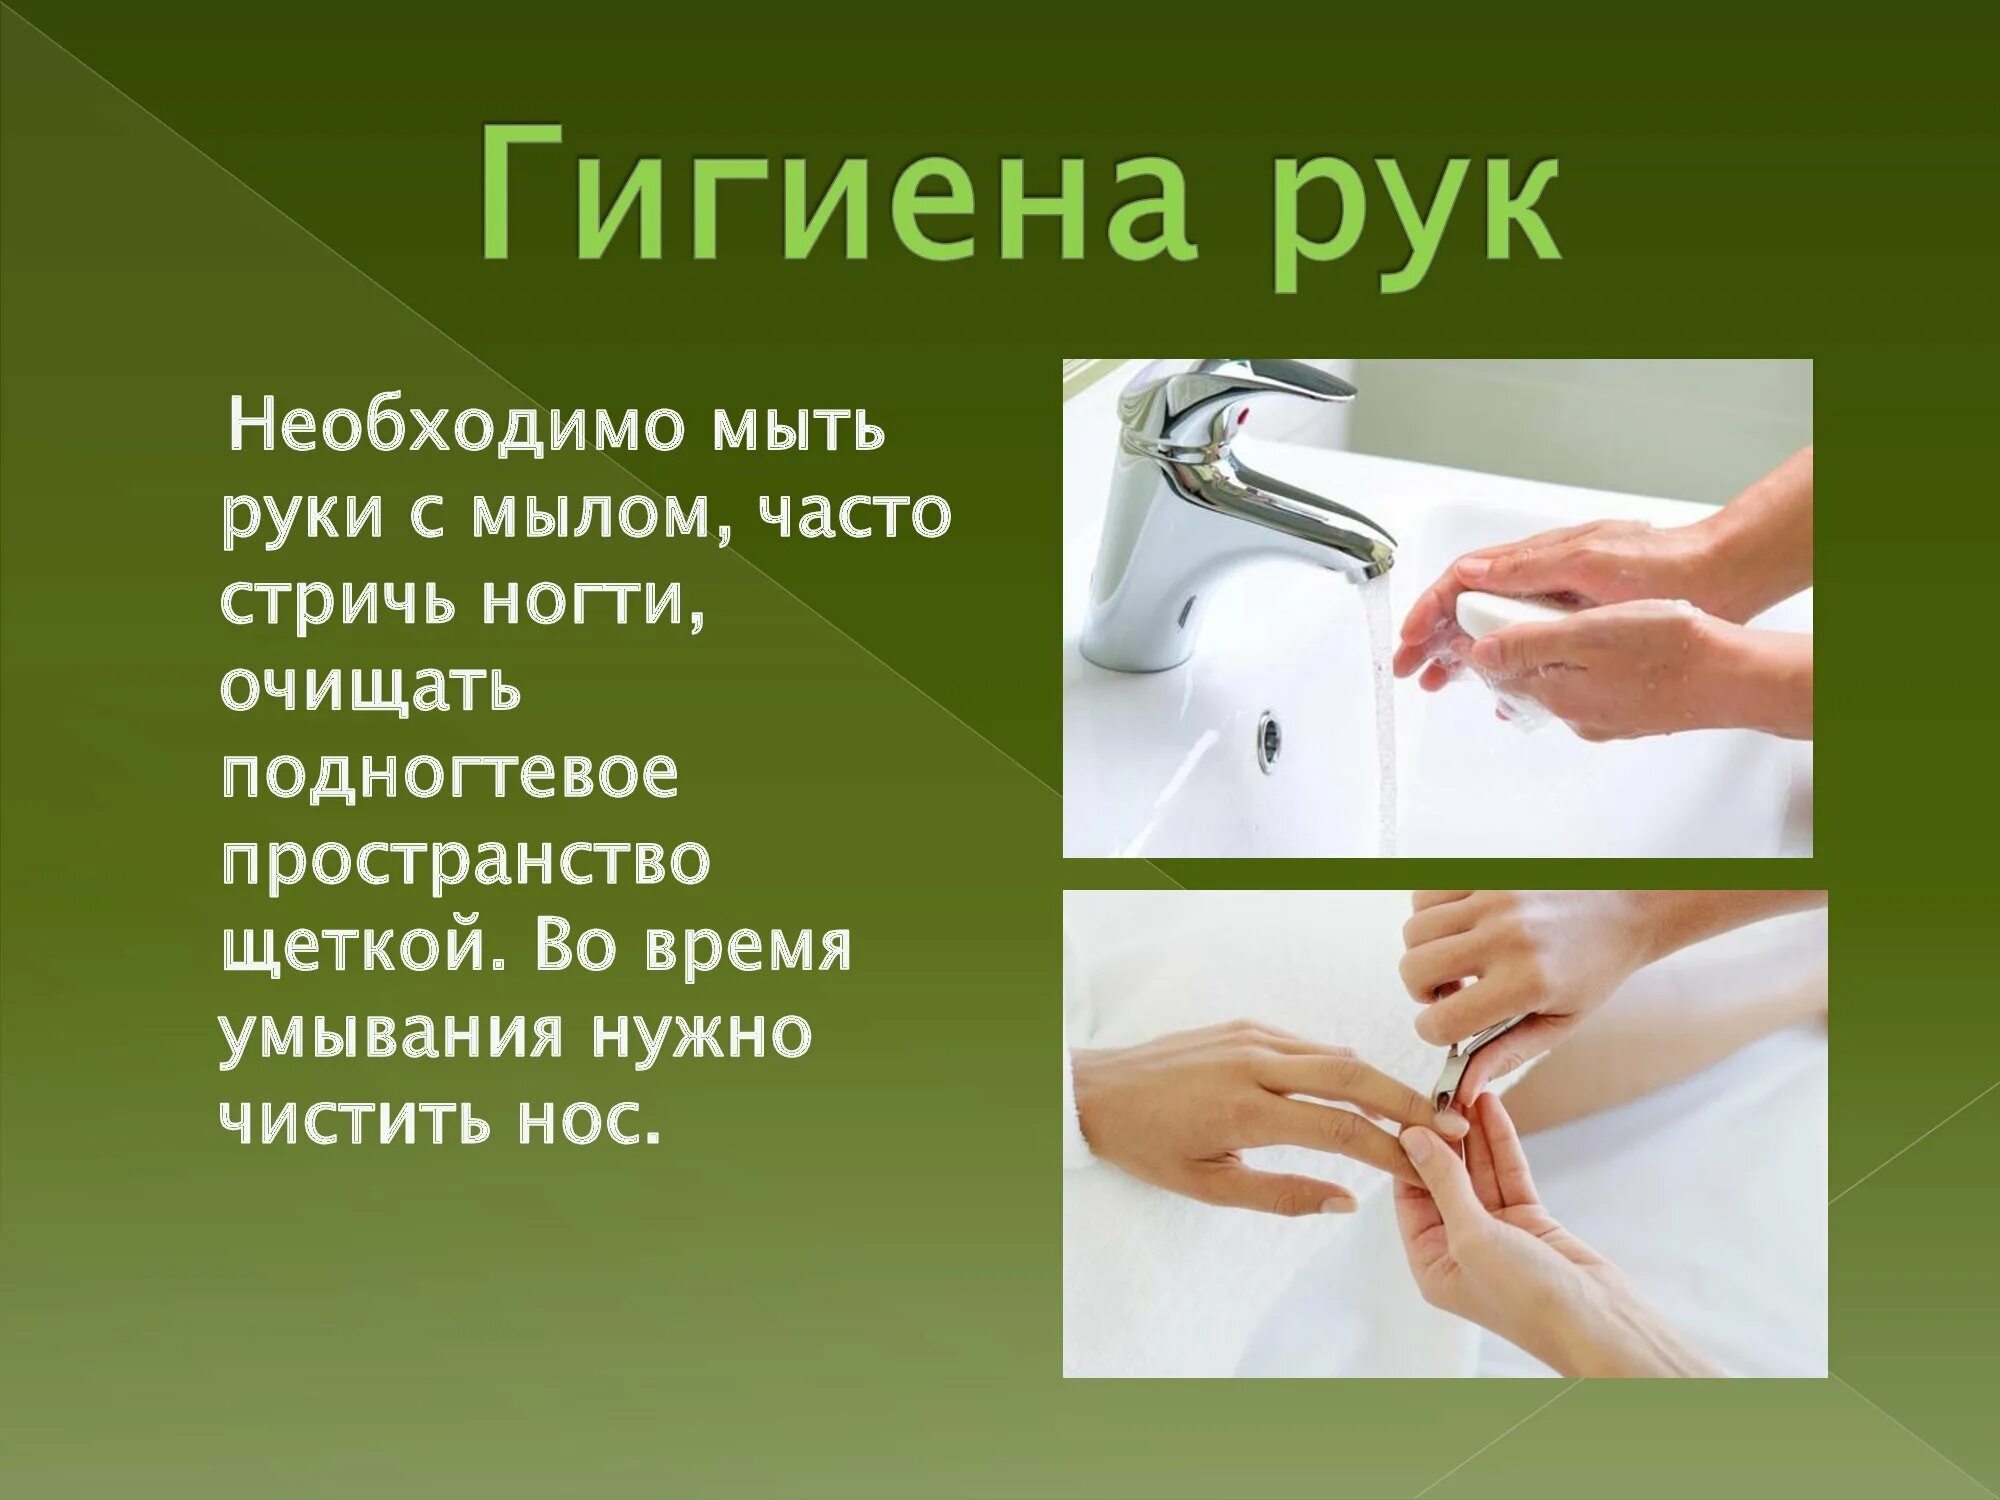 Гигиена рук. Гигиена мытья рук. Личная гигиена мытье рук. Гигиена мытья рук для детей. Мою руки 3 минуты